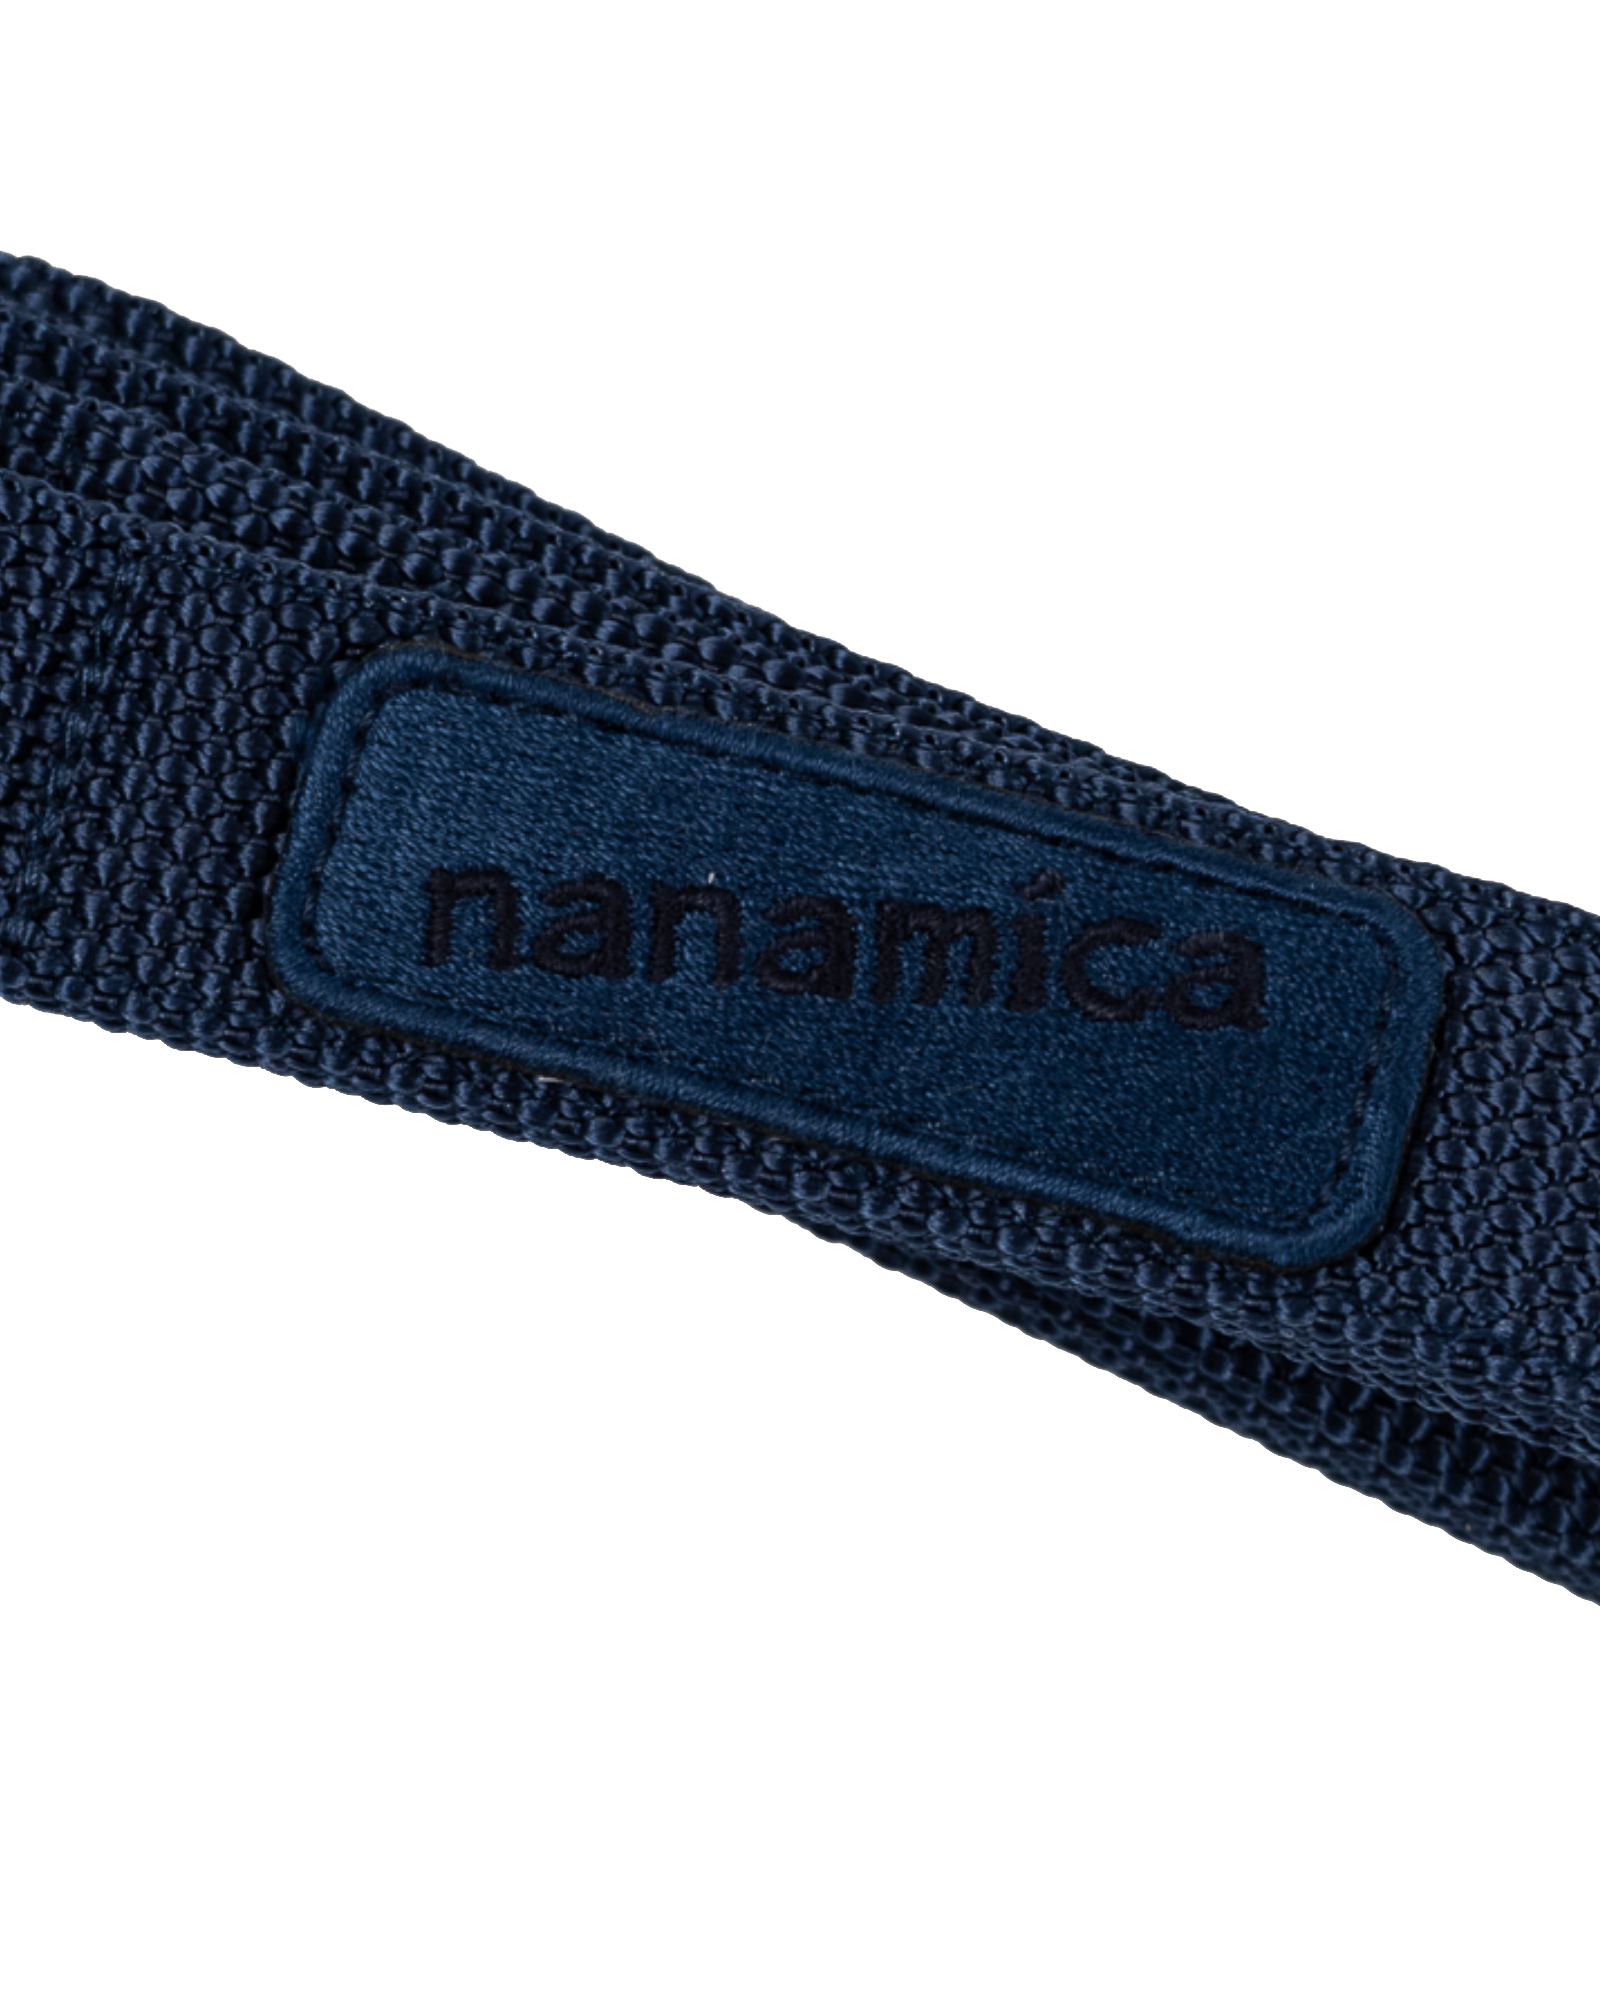 nanamica - Accessory - Tech - Belt - Navy